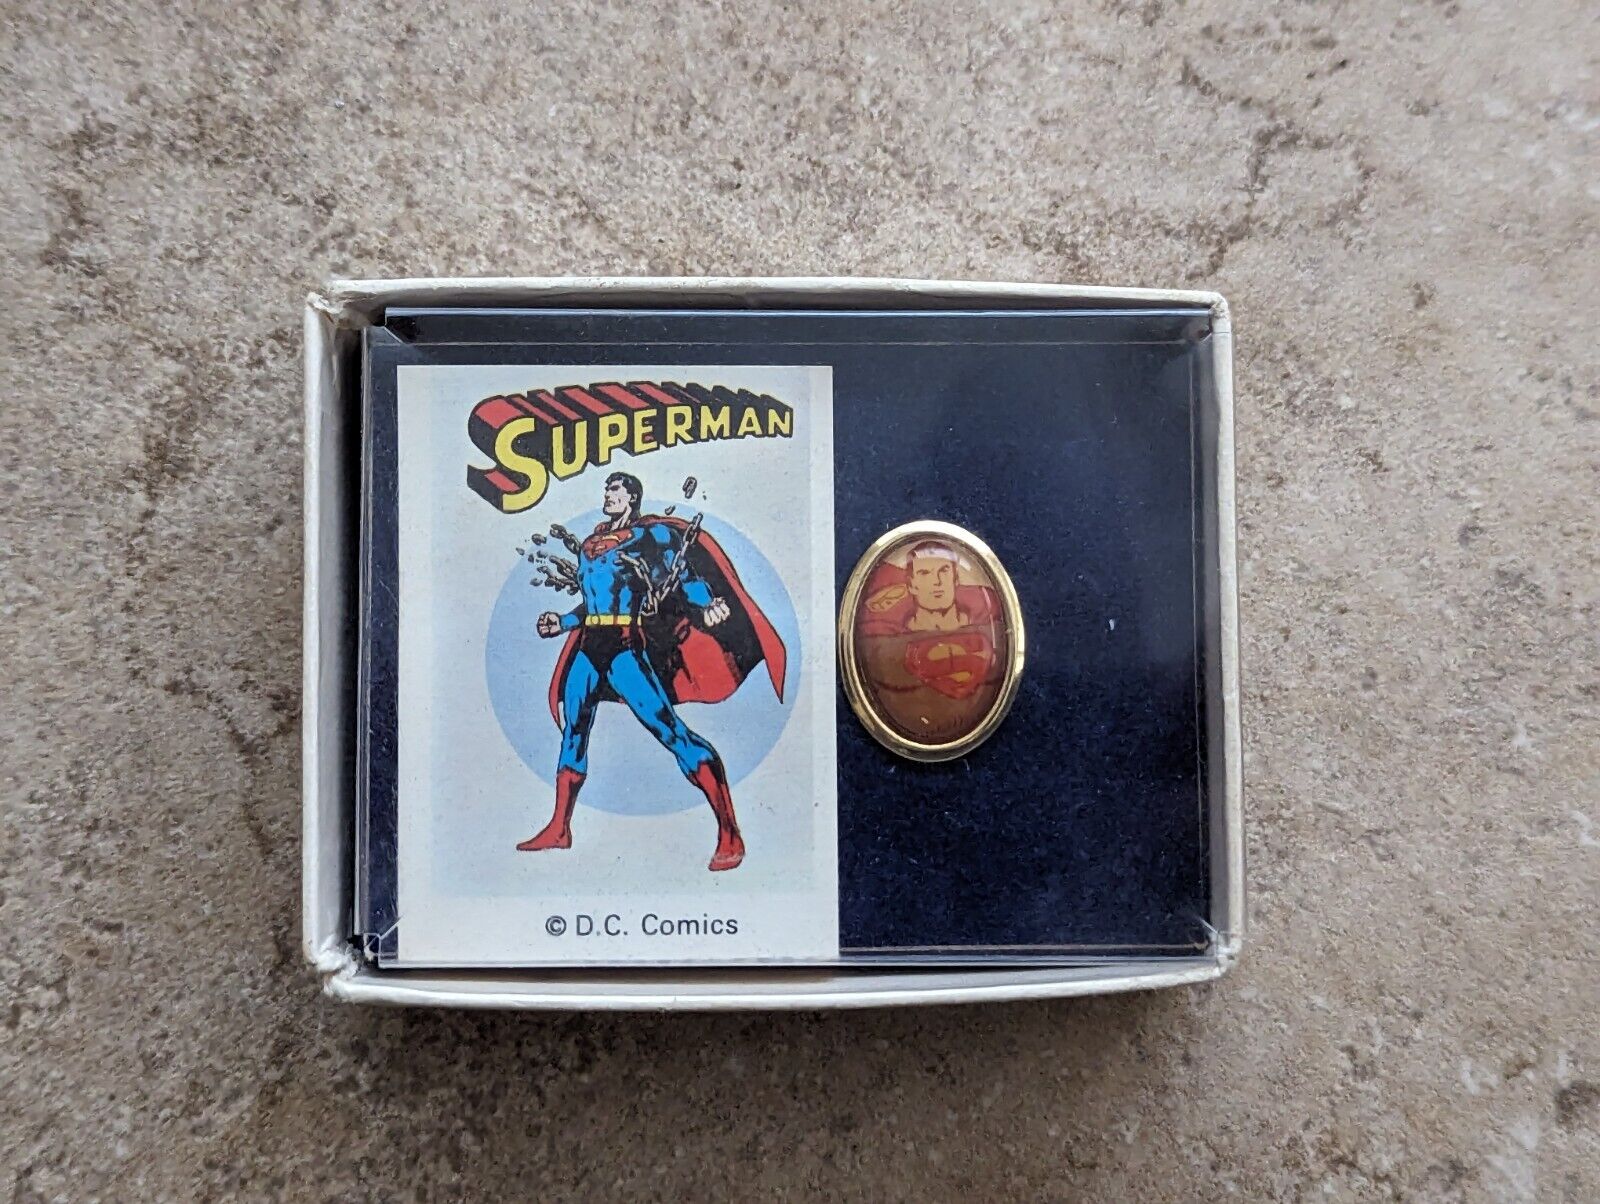 RARE Vintage Superman Super Man D.C. Comics Photo Pin Howard Eldon Collectible 